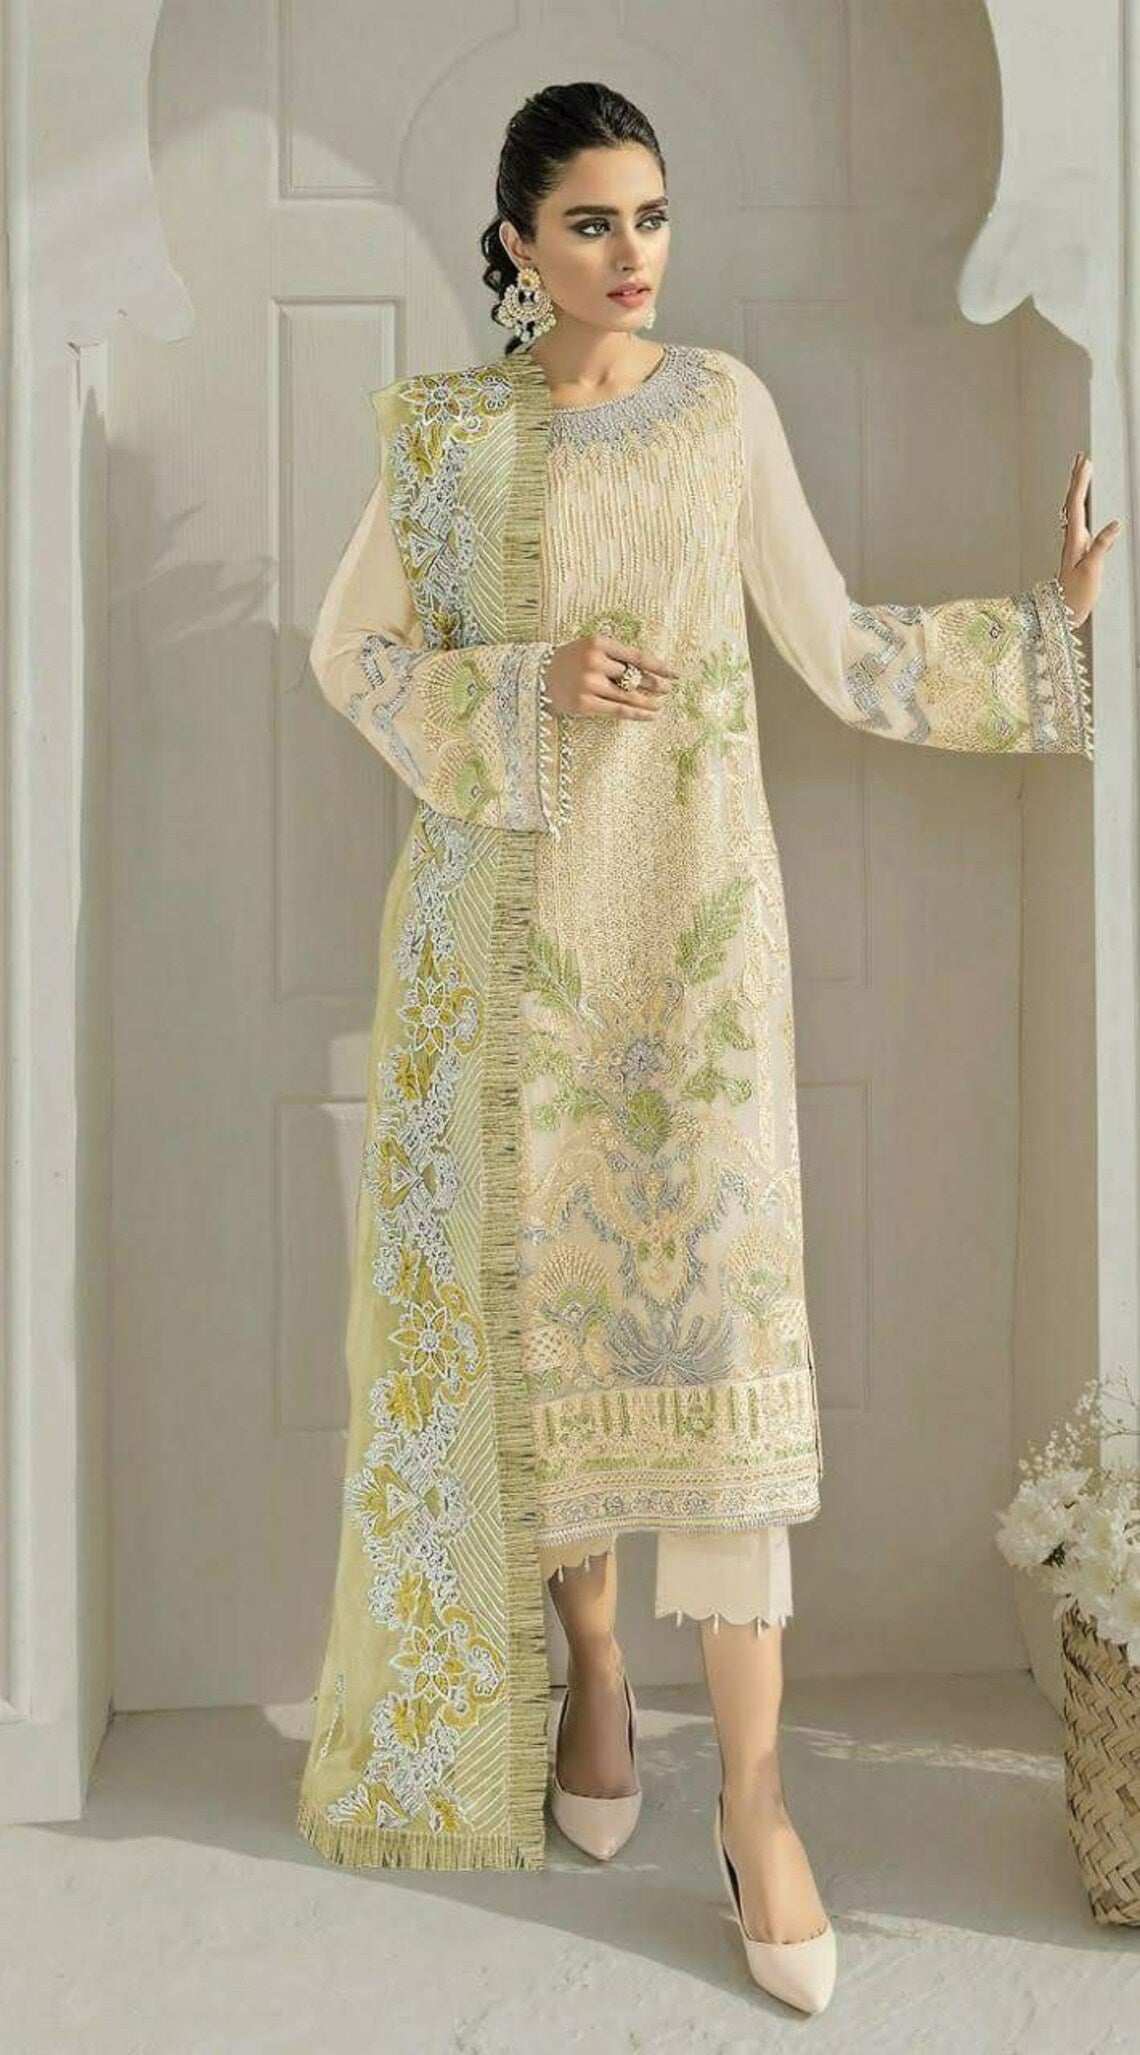 Gown Ethnic Indian Designer Salwar New Pakistani Kameez Anarkali Suit Bollywood New Festival Bridal Fashionable Formal Christmas Long Gown